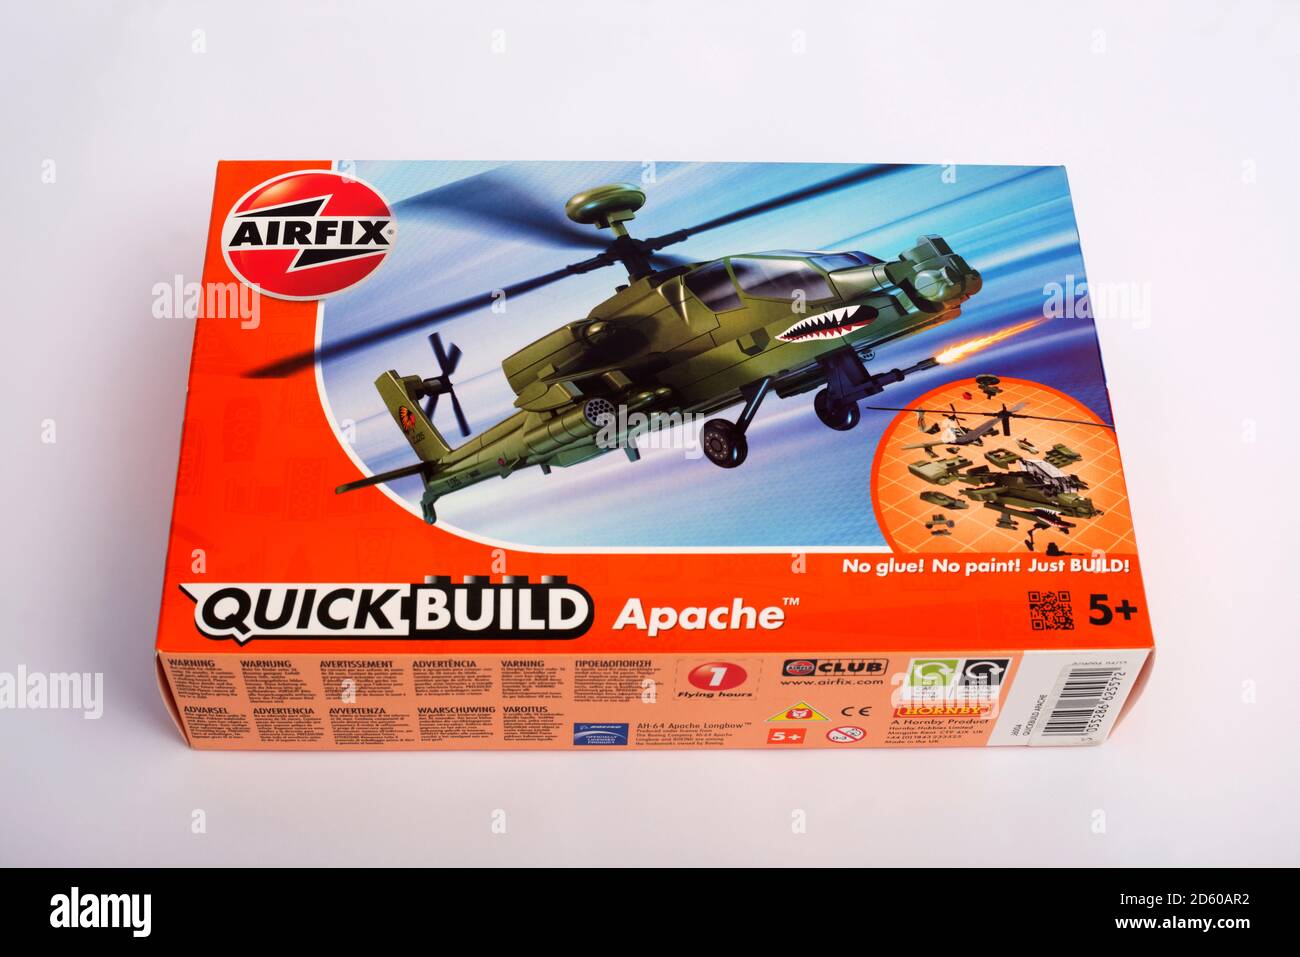 Airfix QuickBuild Apache model helicopter Stock Photo